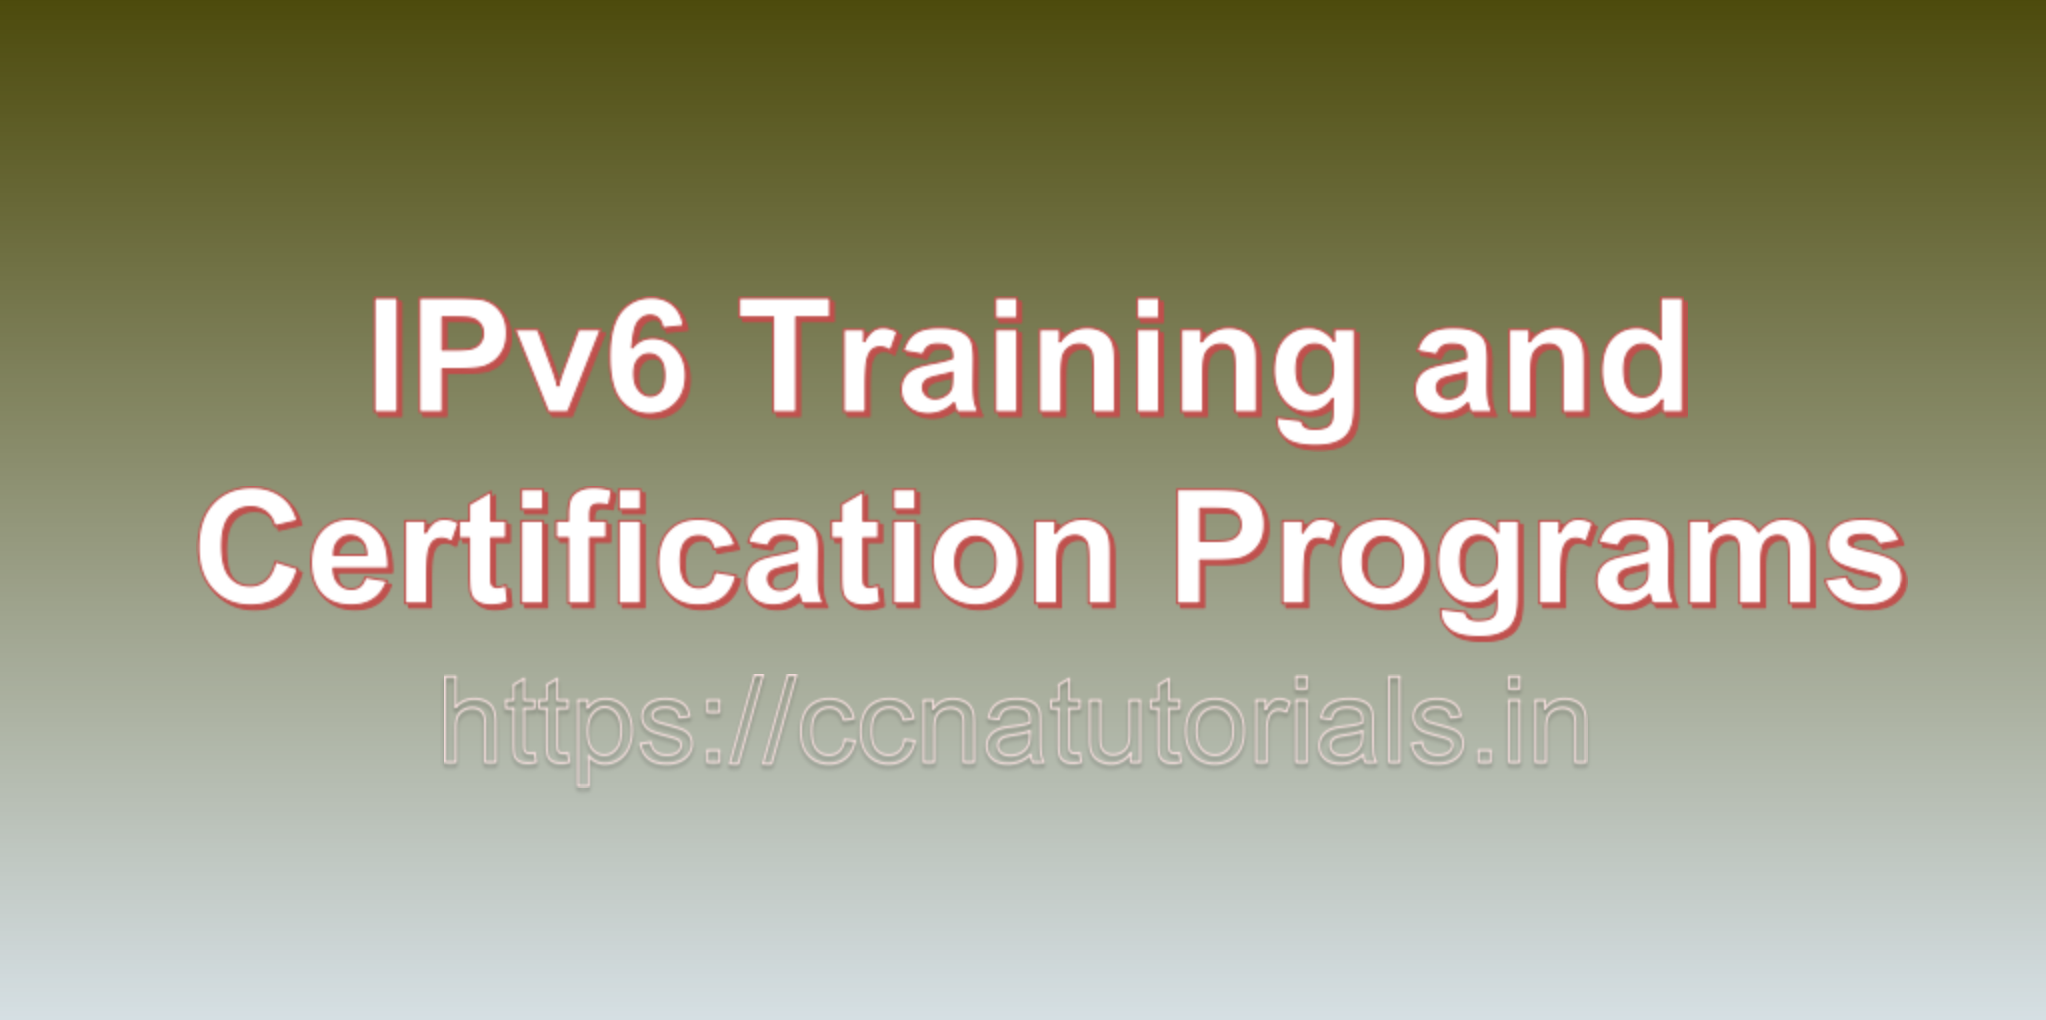 IPv6 Training and Certification Programs, ccna, ccna tutorials